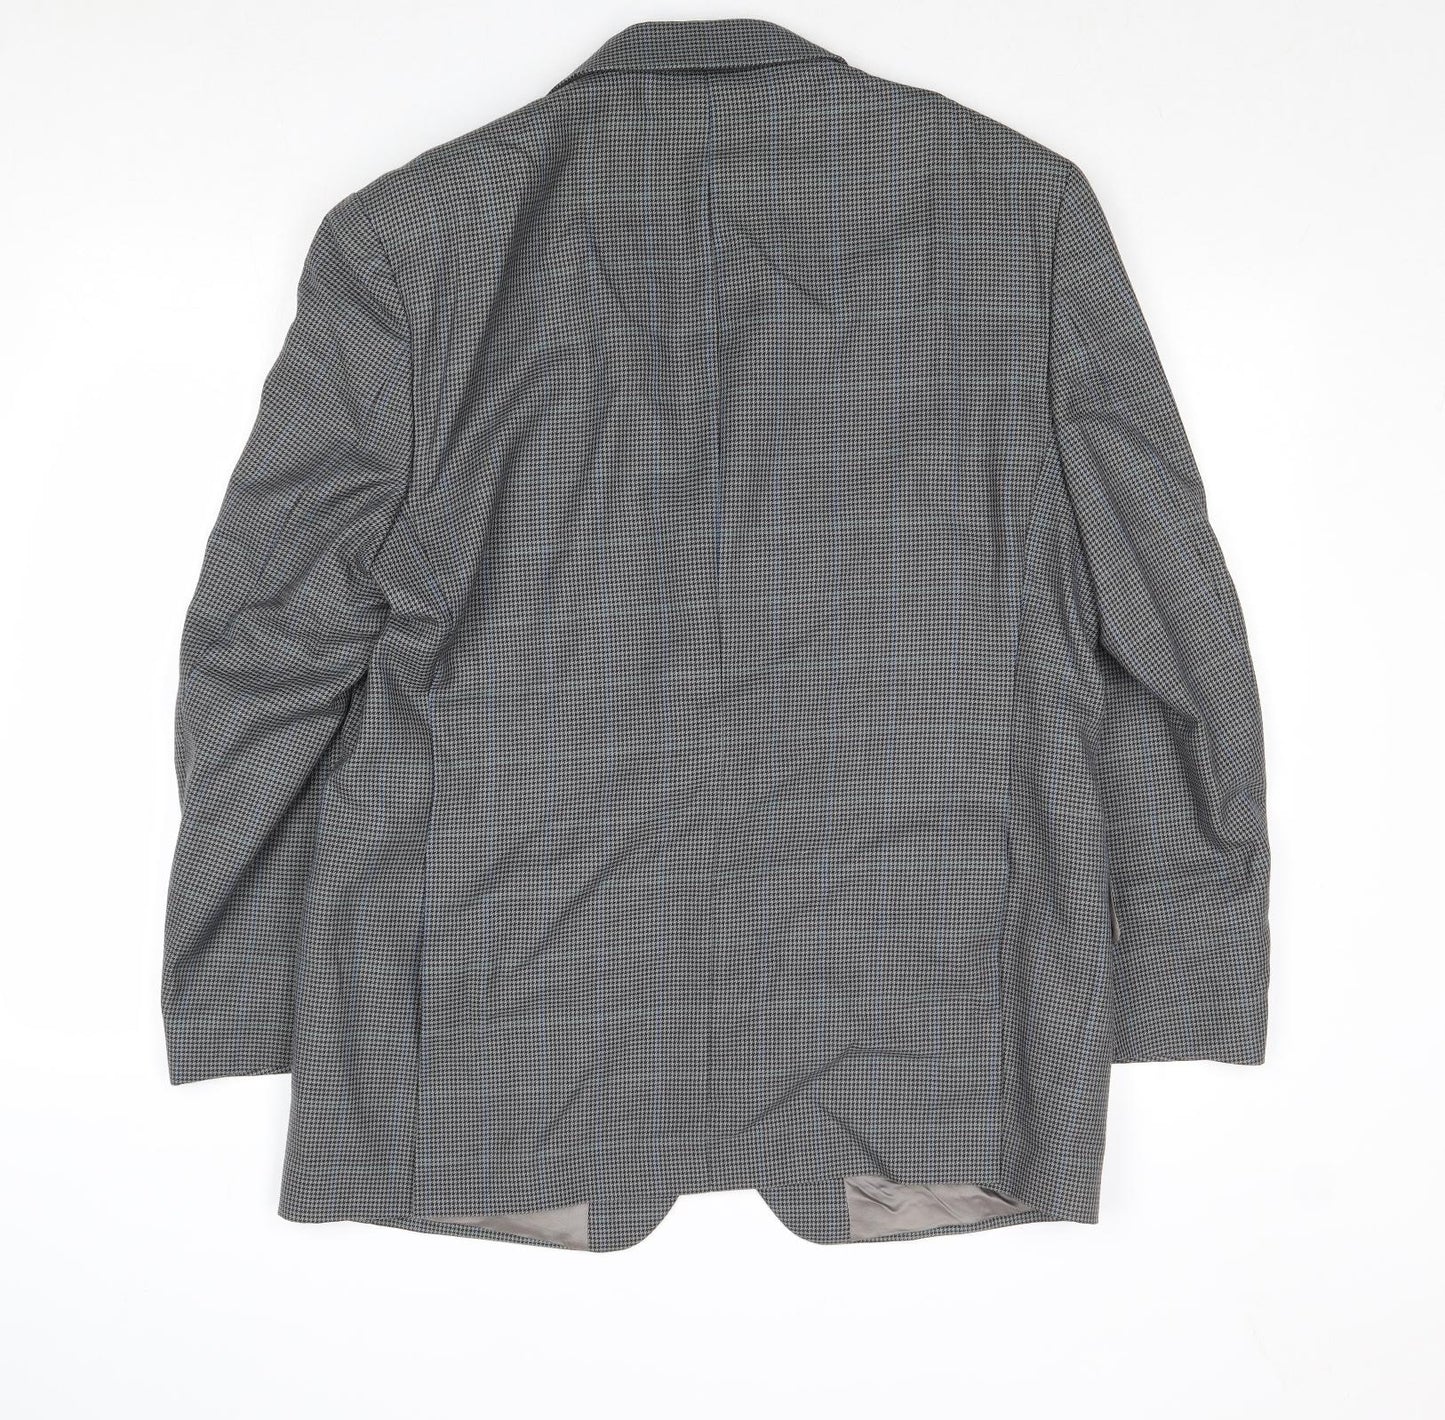 Wellington Mens Grey Geometric Polyester Jacket Suit Jacket Size 42 Regular